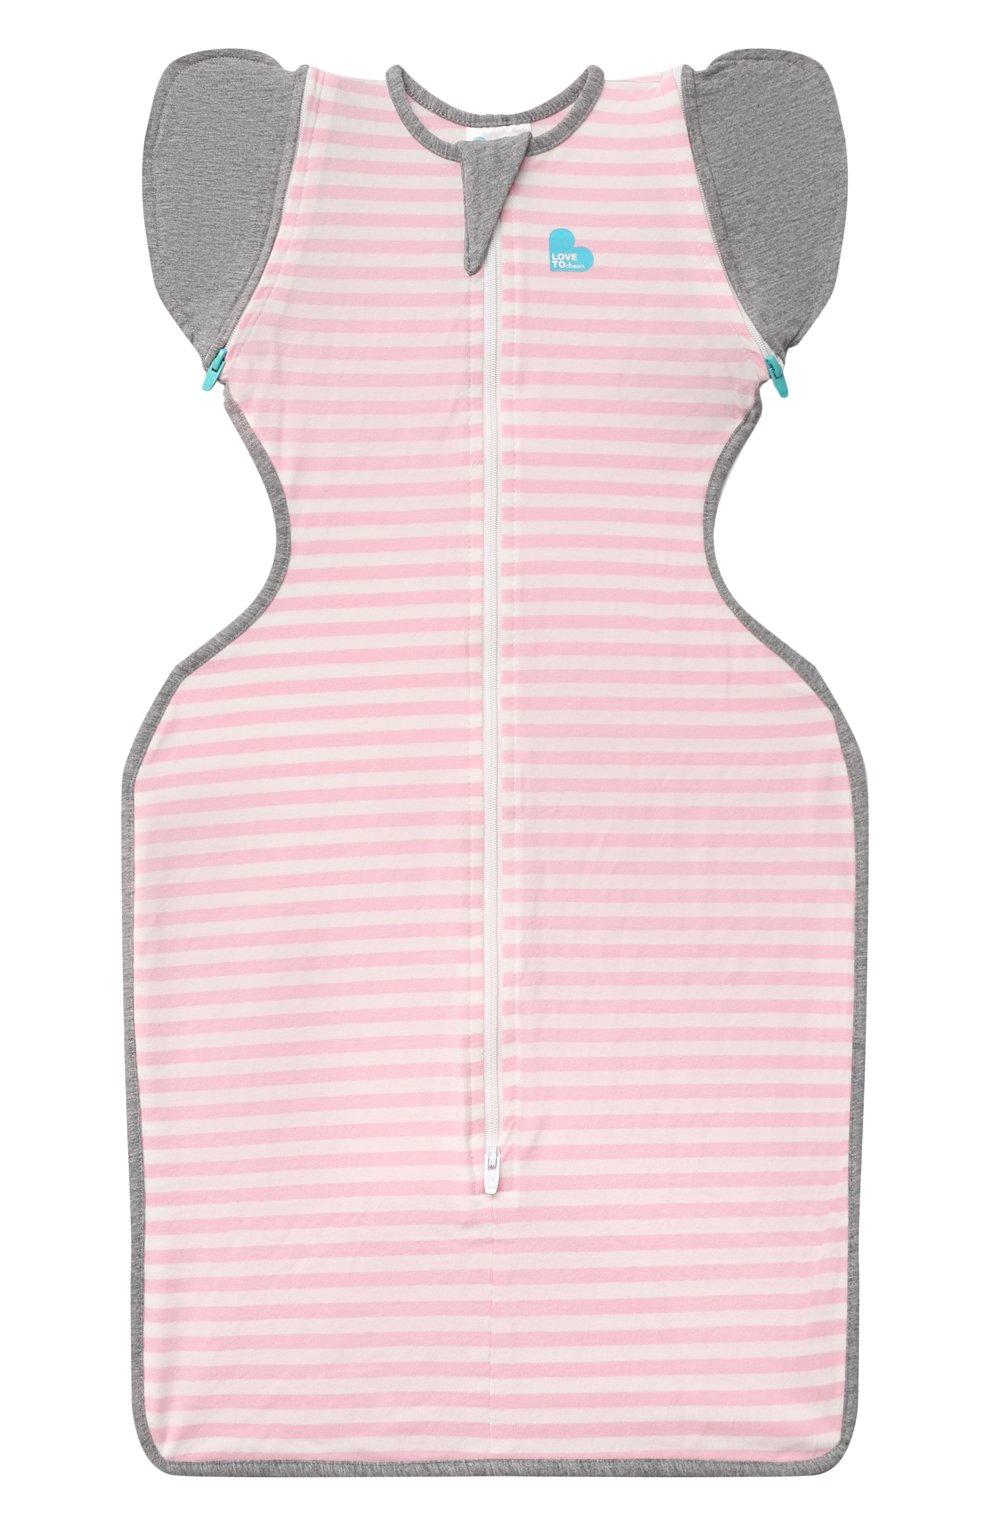 Детский комбинезон-мешок переходного этапа LOVE TO DREAM розового цвета, арт. L20 01 002 PK M | Фото 1 (Материал внешний: Хлопок)